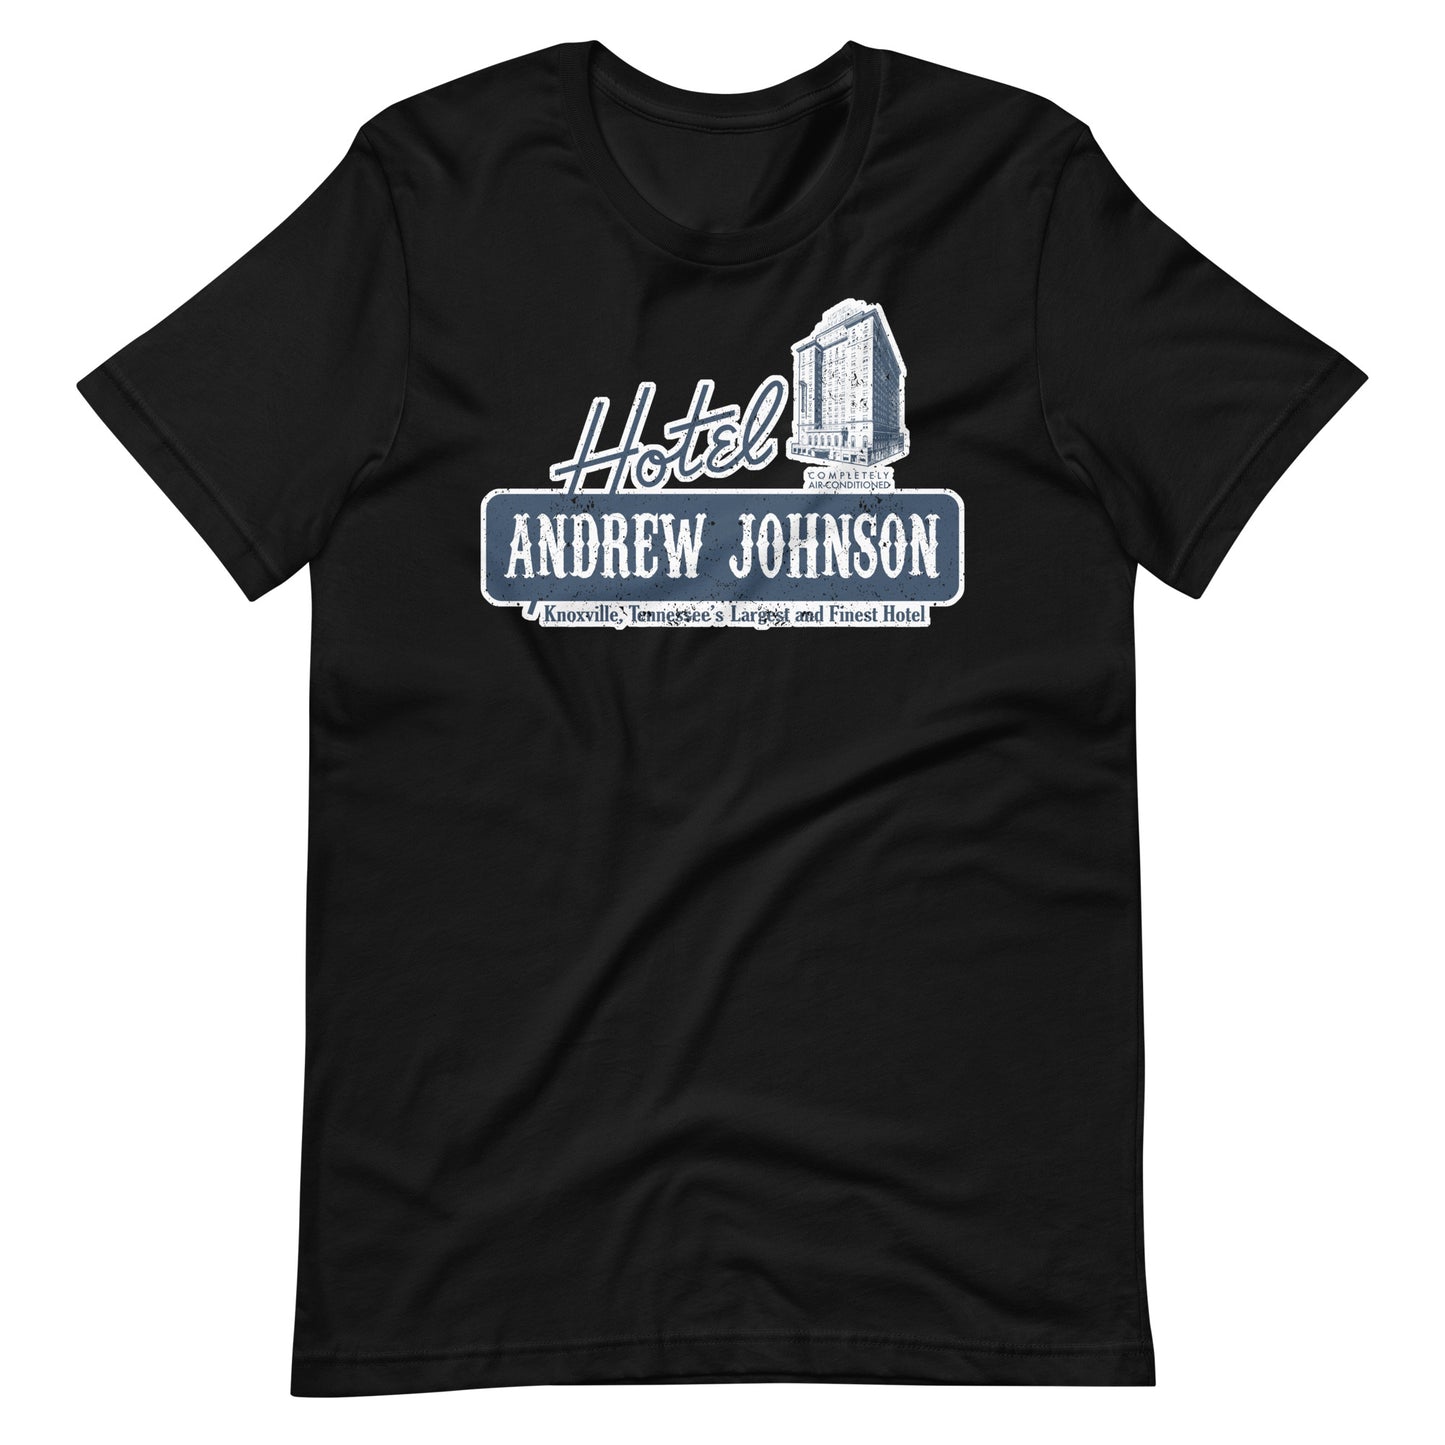 Hotel Andrew Johnson Unisex T-shirt in Blue by RICK BALDWIN